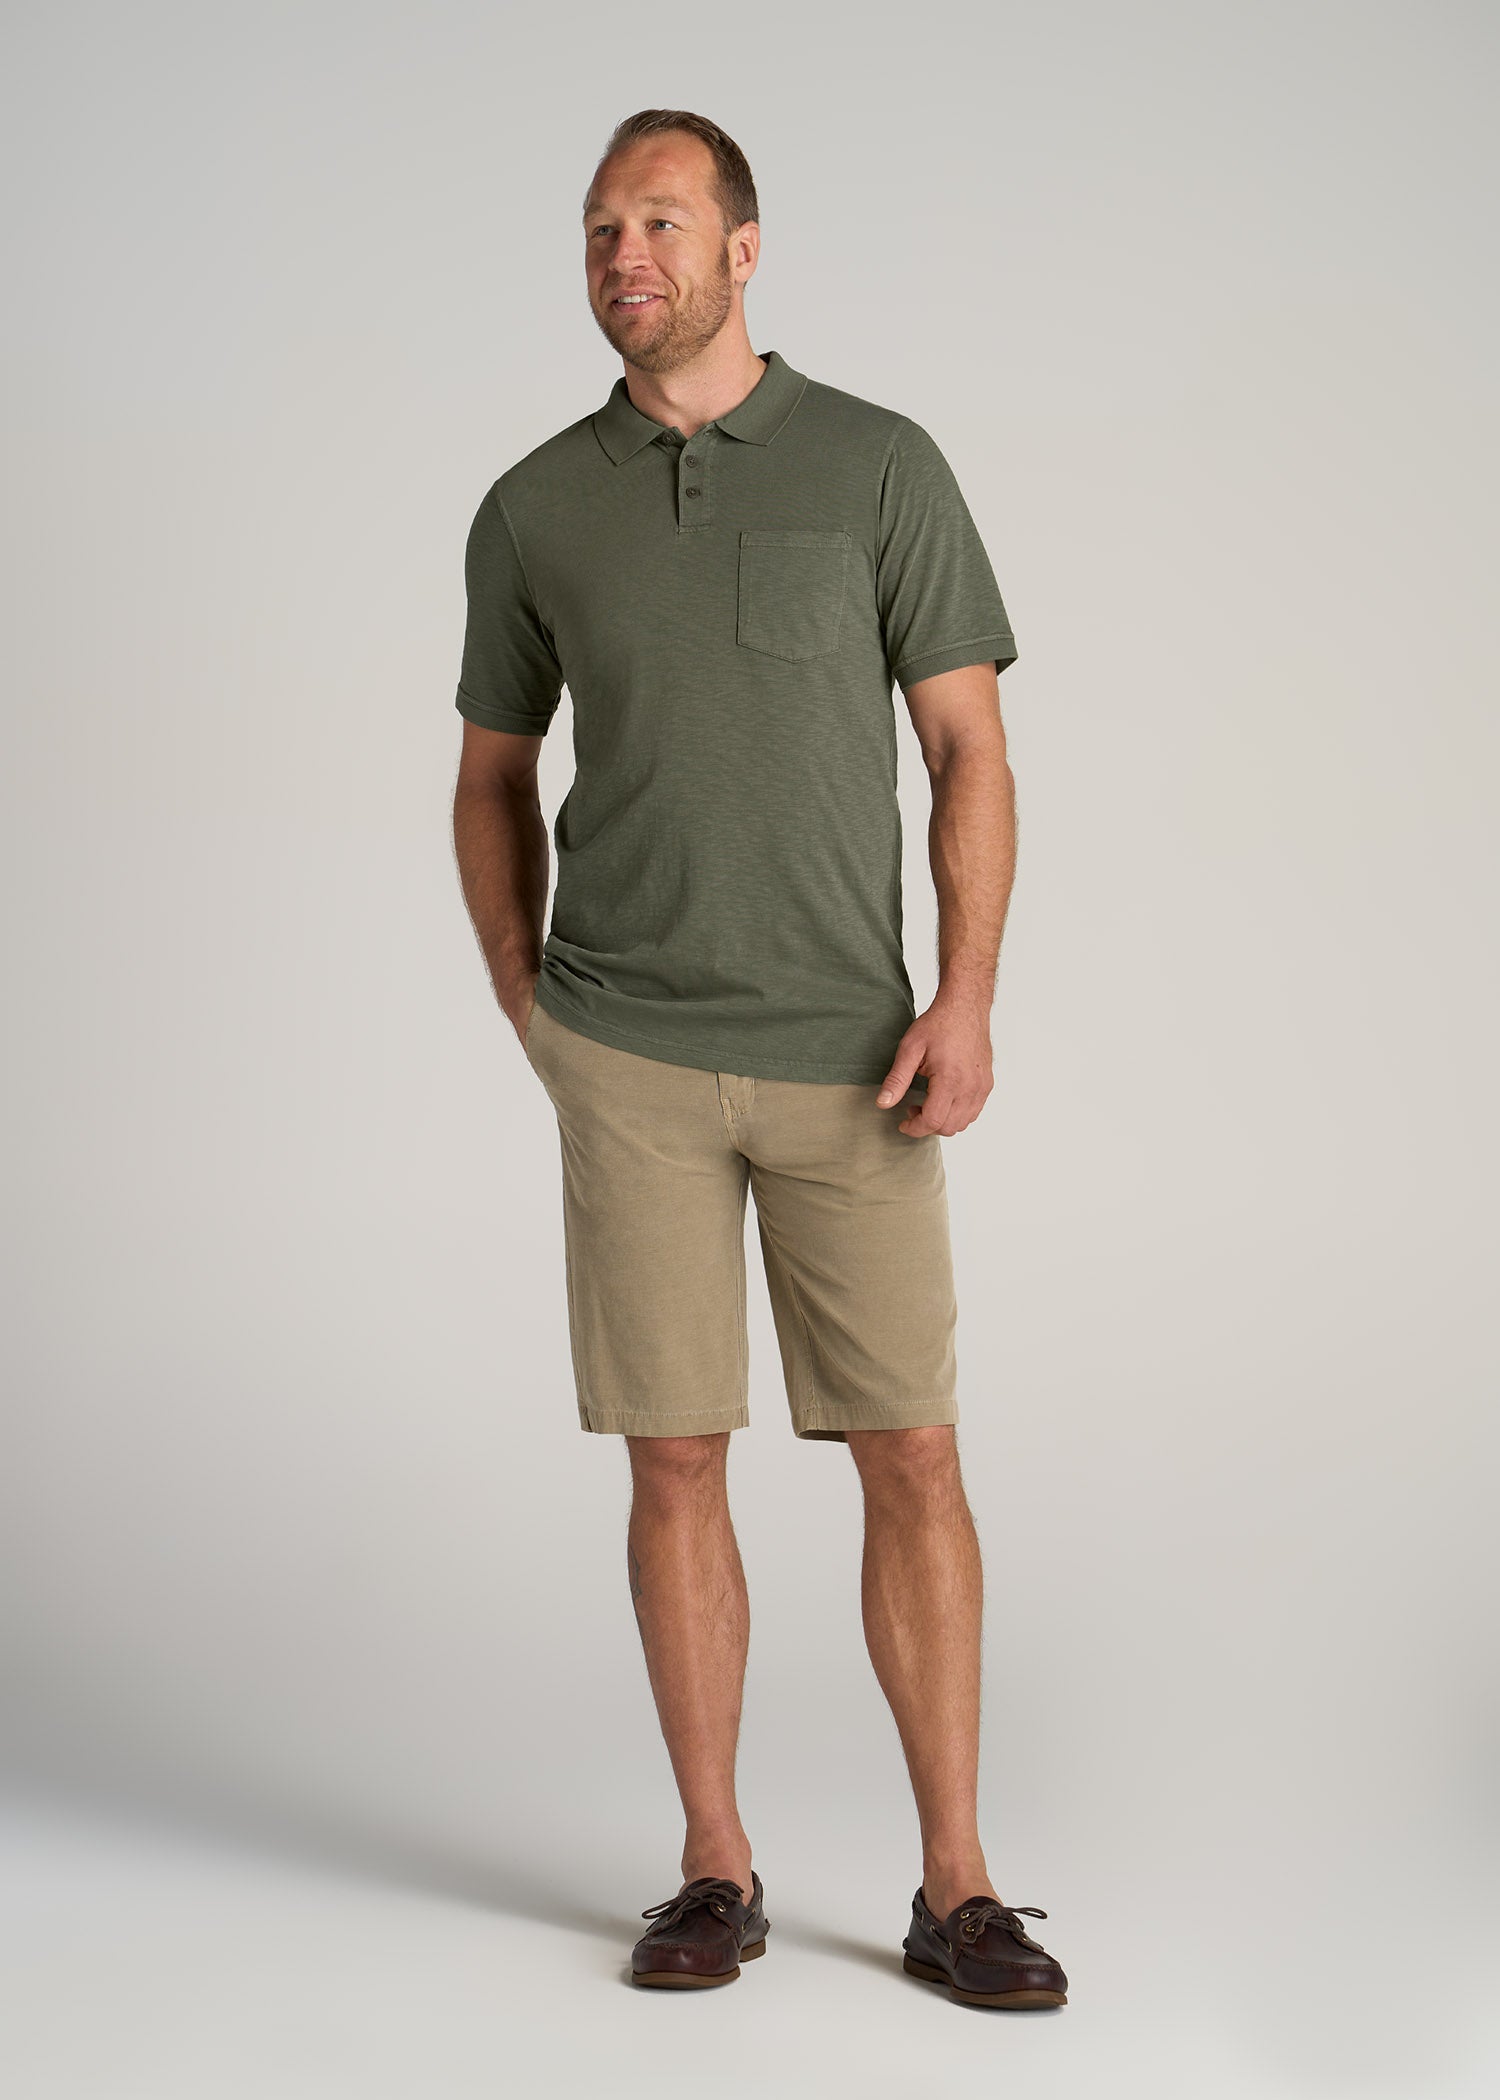     American-Tall-Men-LJ-Slub-Pocket-Polo-Shirt-Vintage-Canoe-Green-full